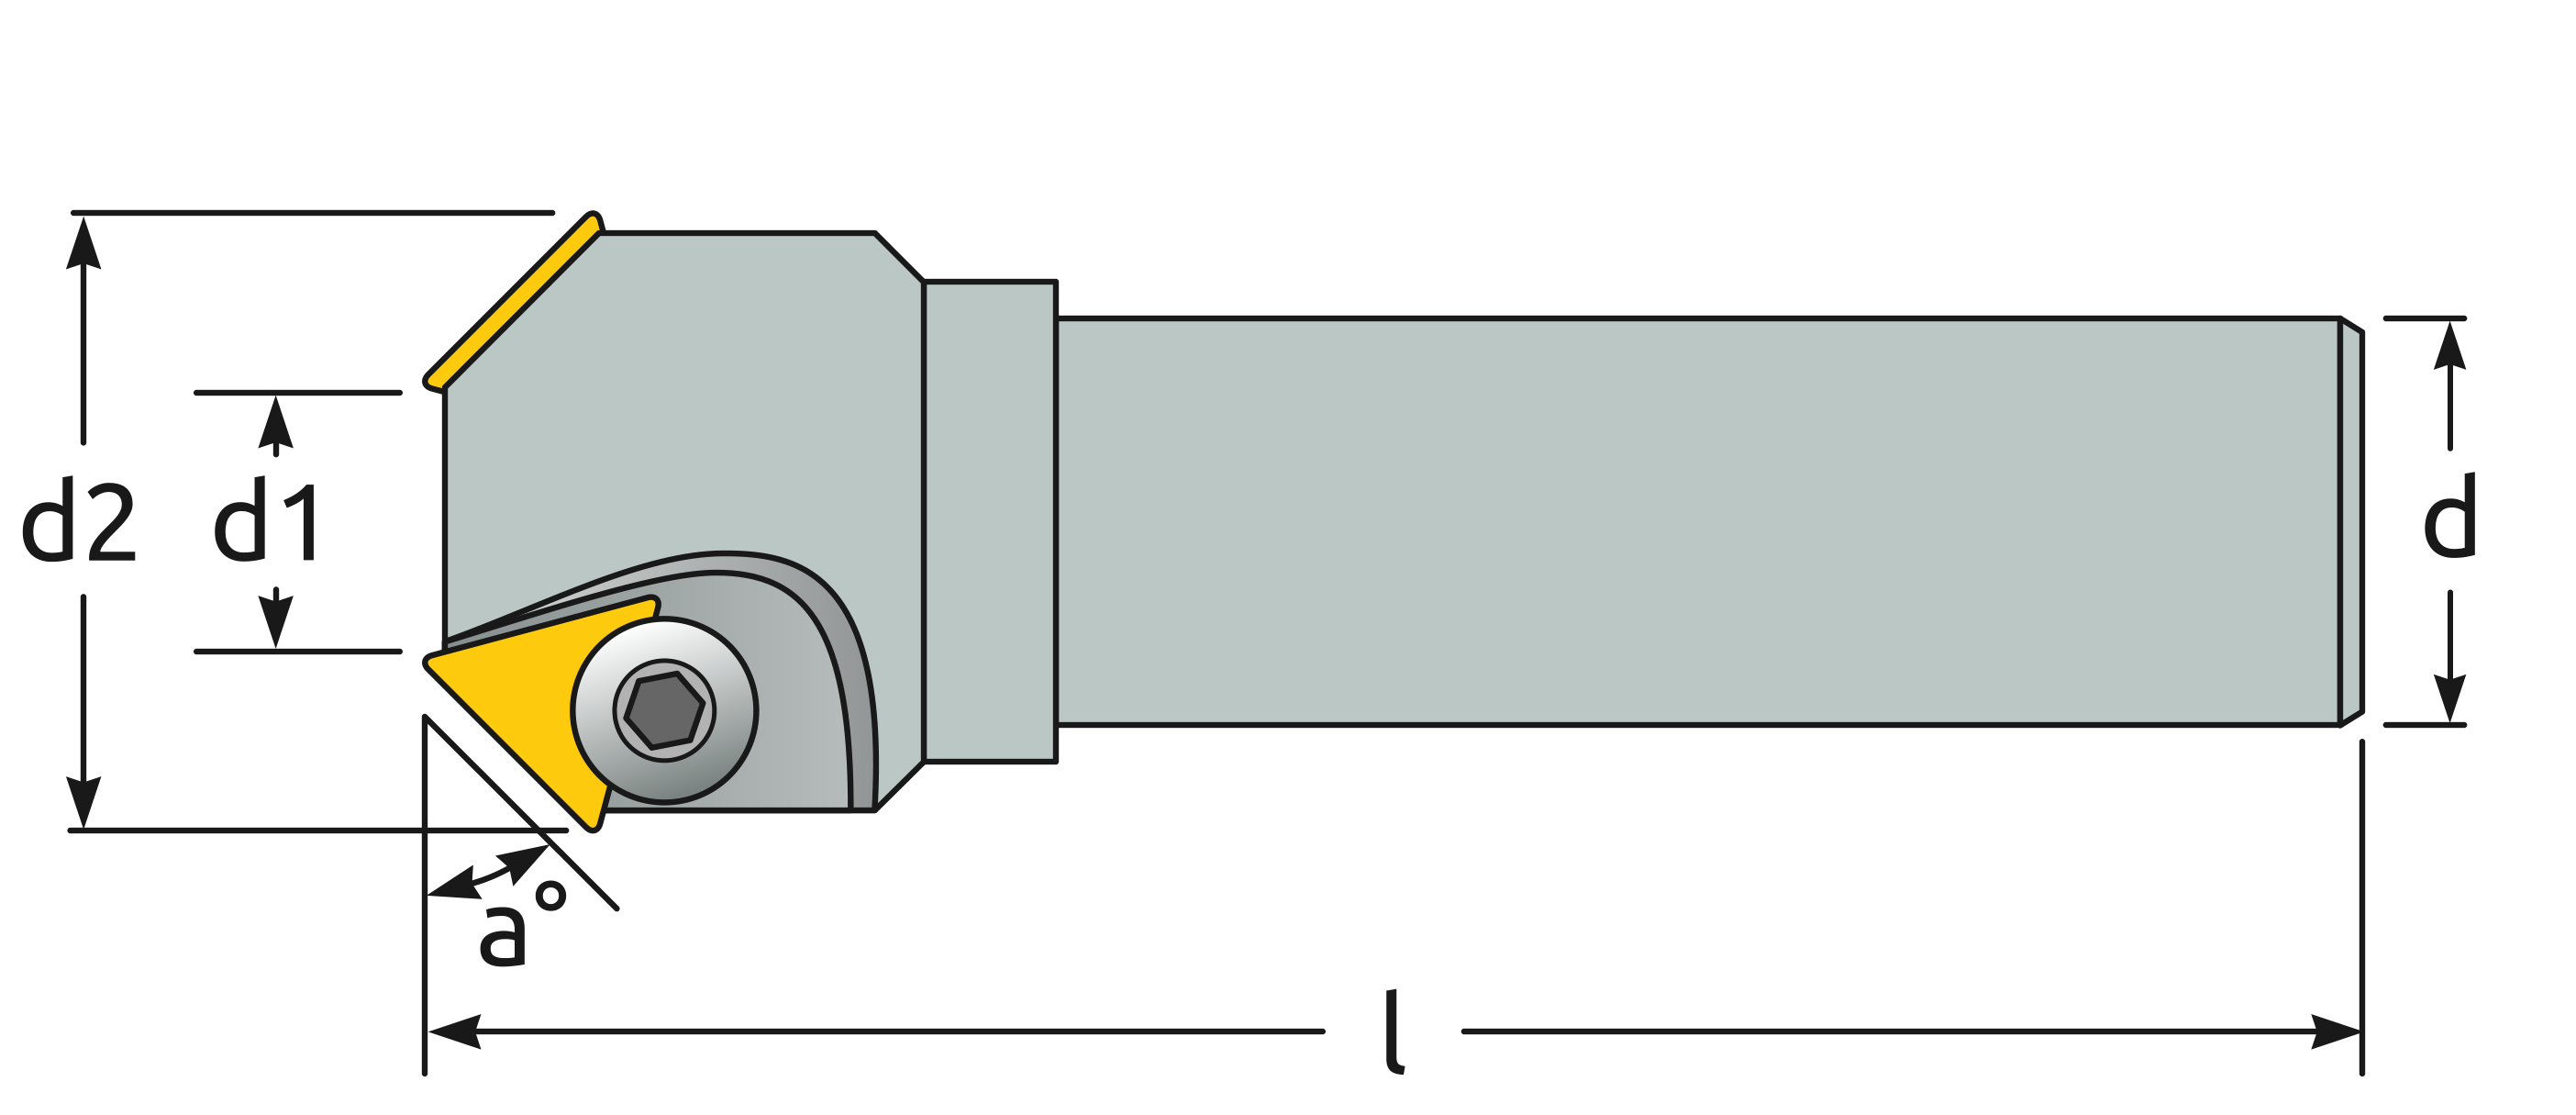 Dimensiones del Porta insertos VCE-4550